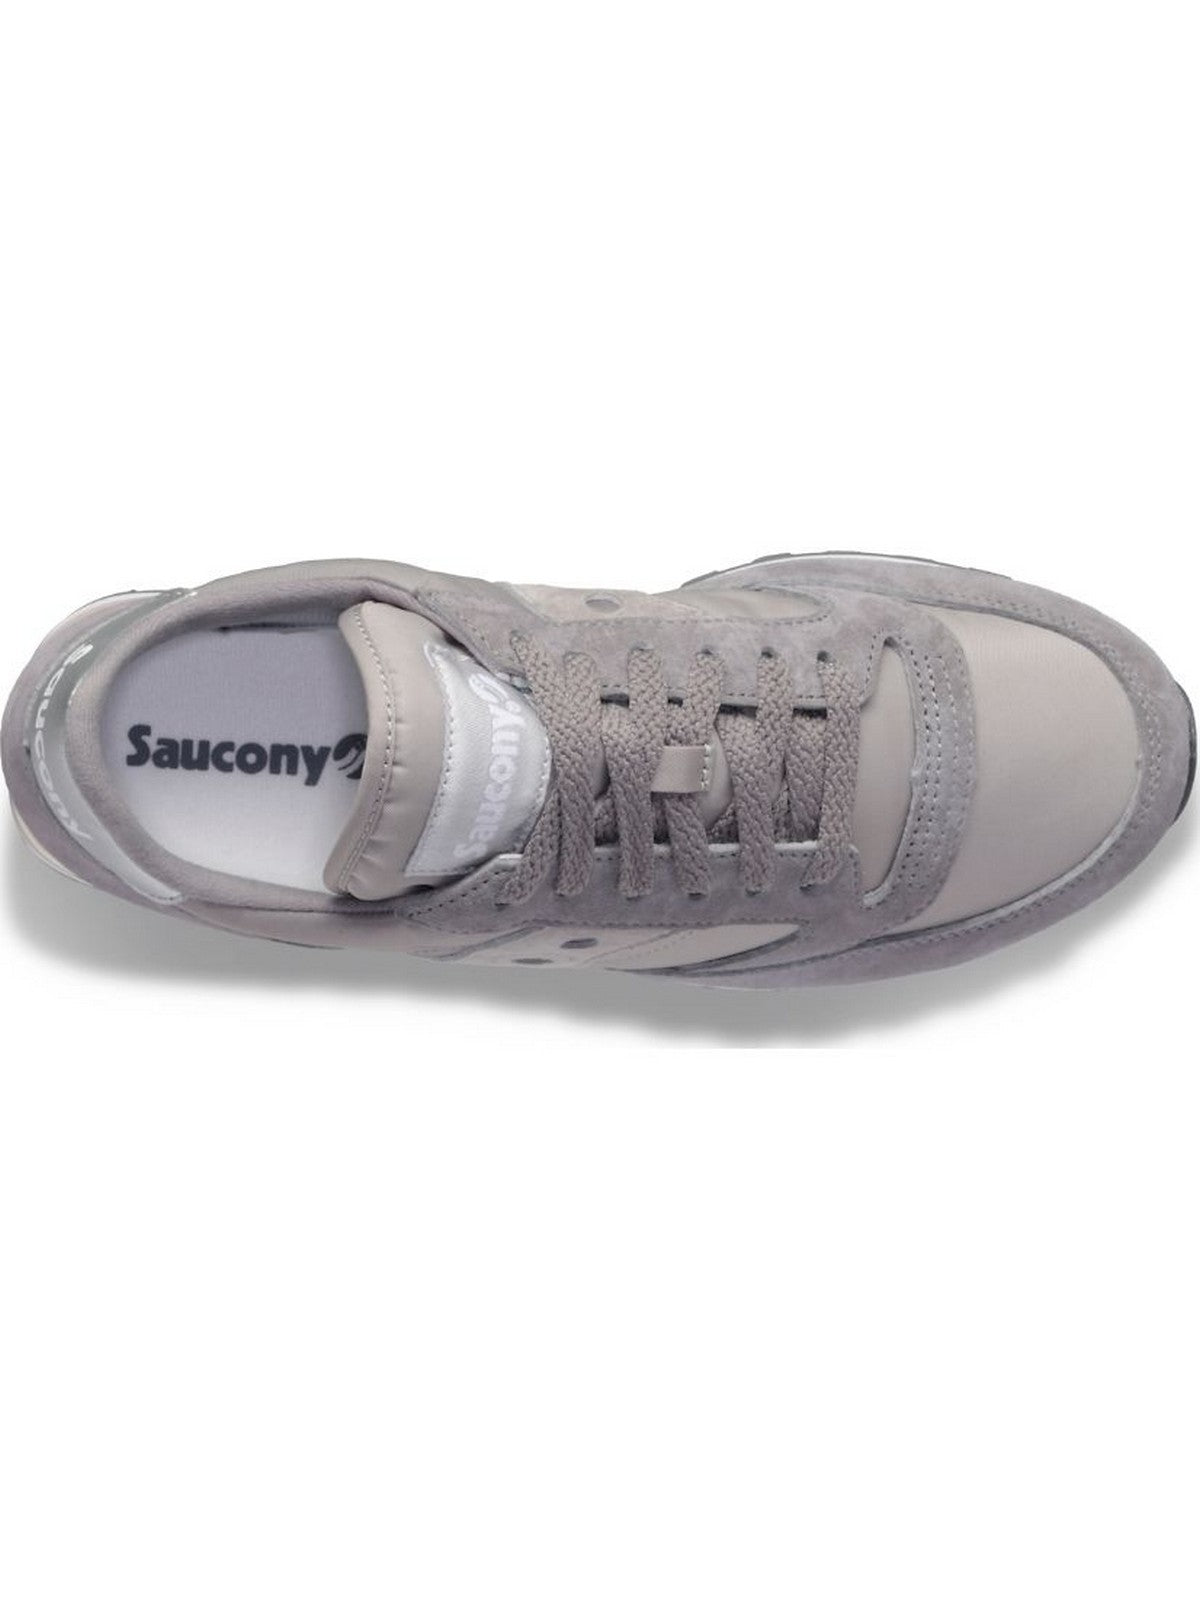 SAUCONY Sneaker Donna Jazz triple S60530-21 Grigio